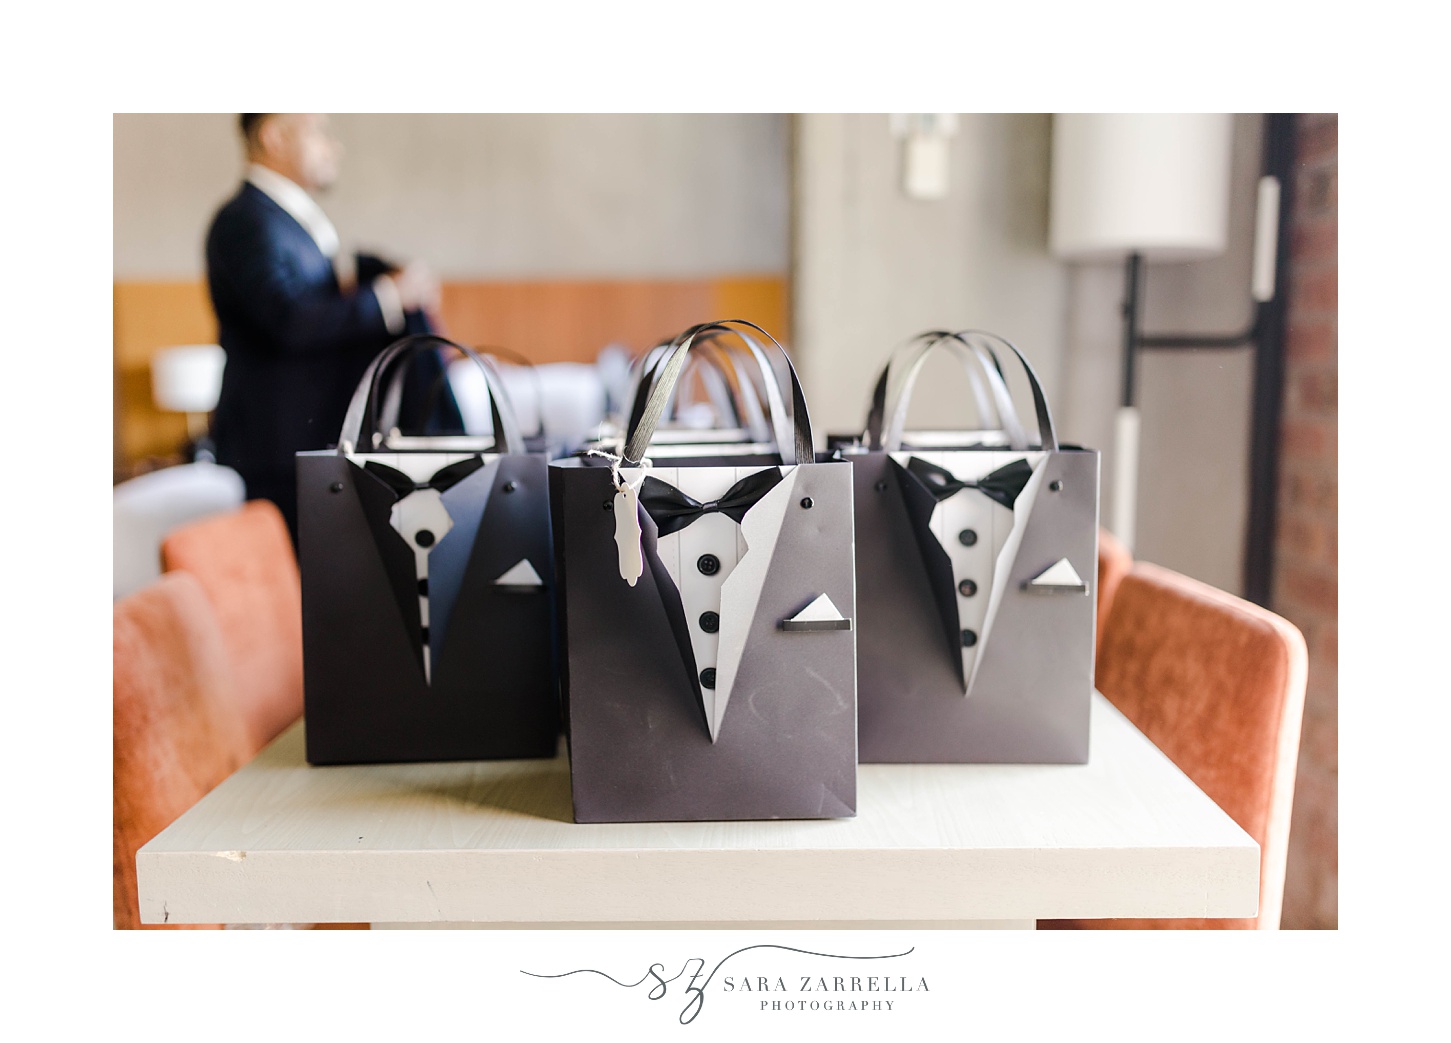 tuxedo bags for groomsmen gifts at Harbor Lights